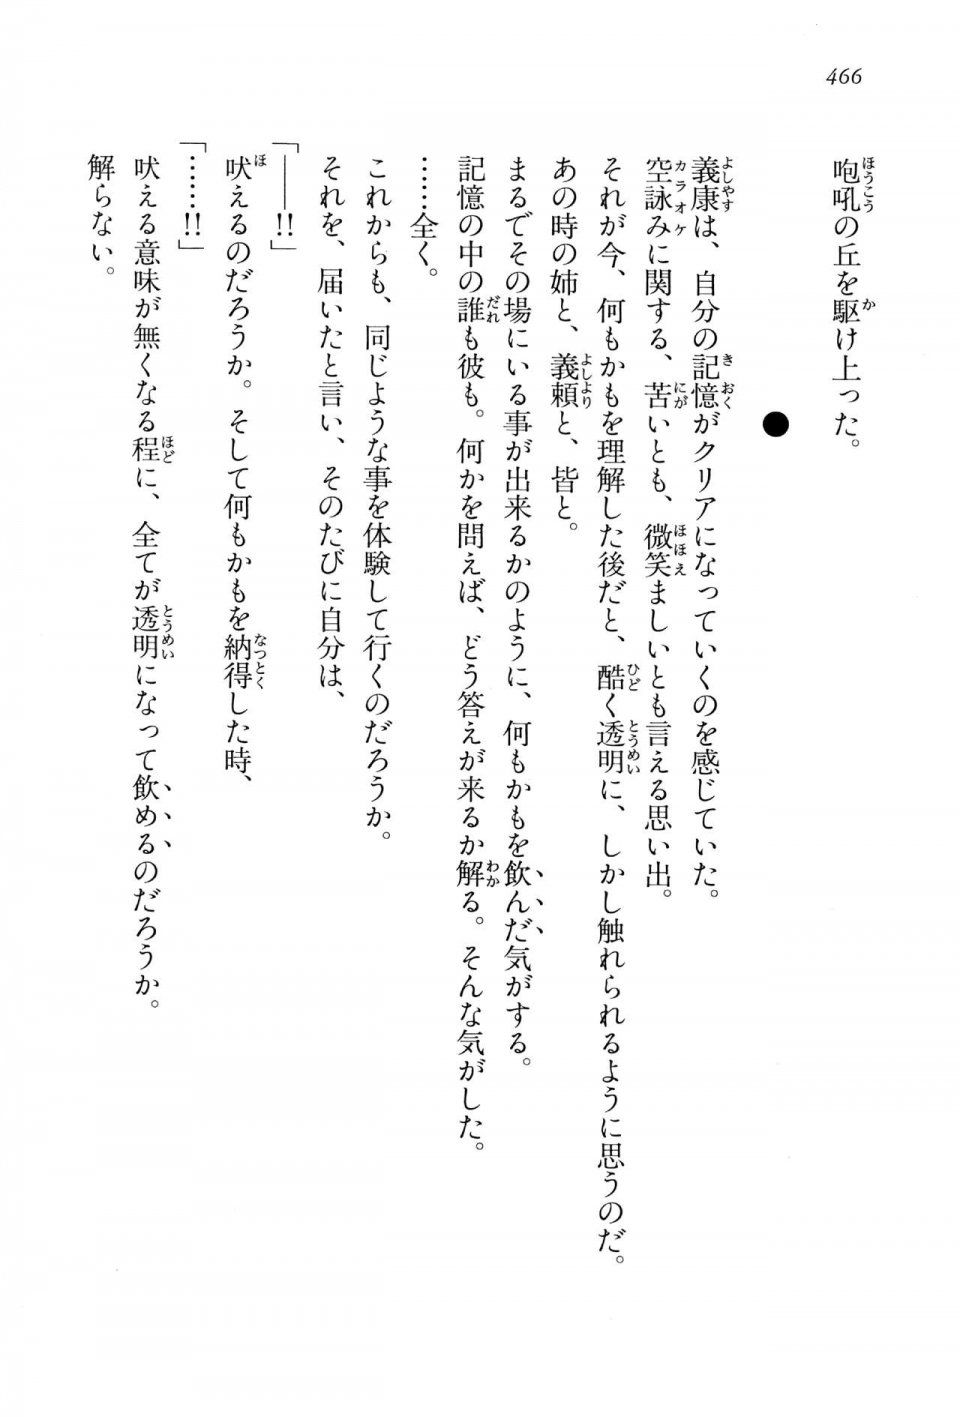 Kyoukai Senjou no Horizon LN Vol 15(6C) Part 1 - Photo #466